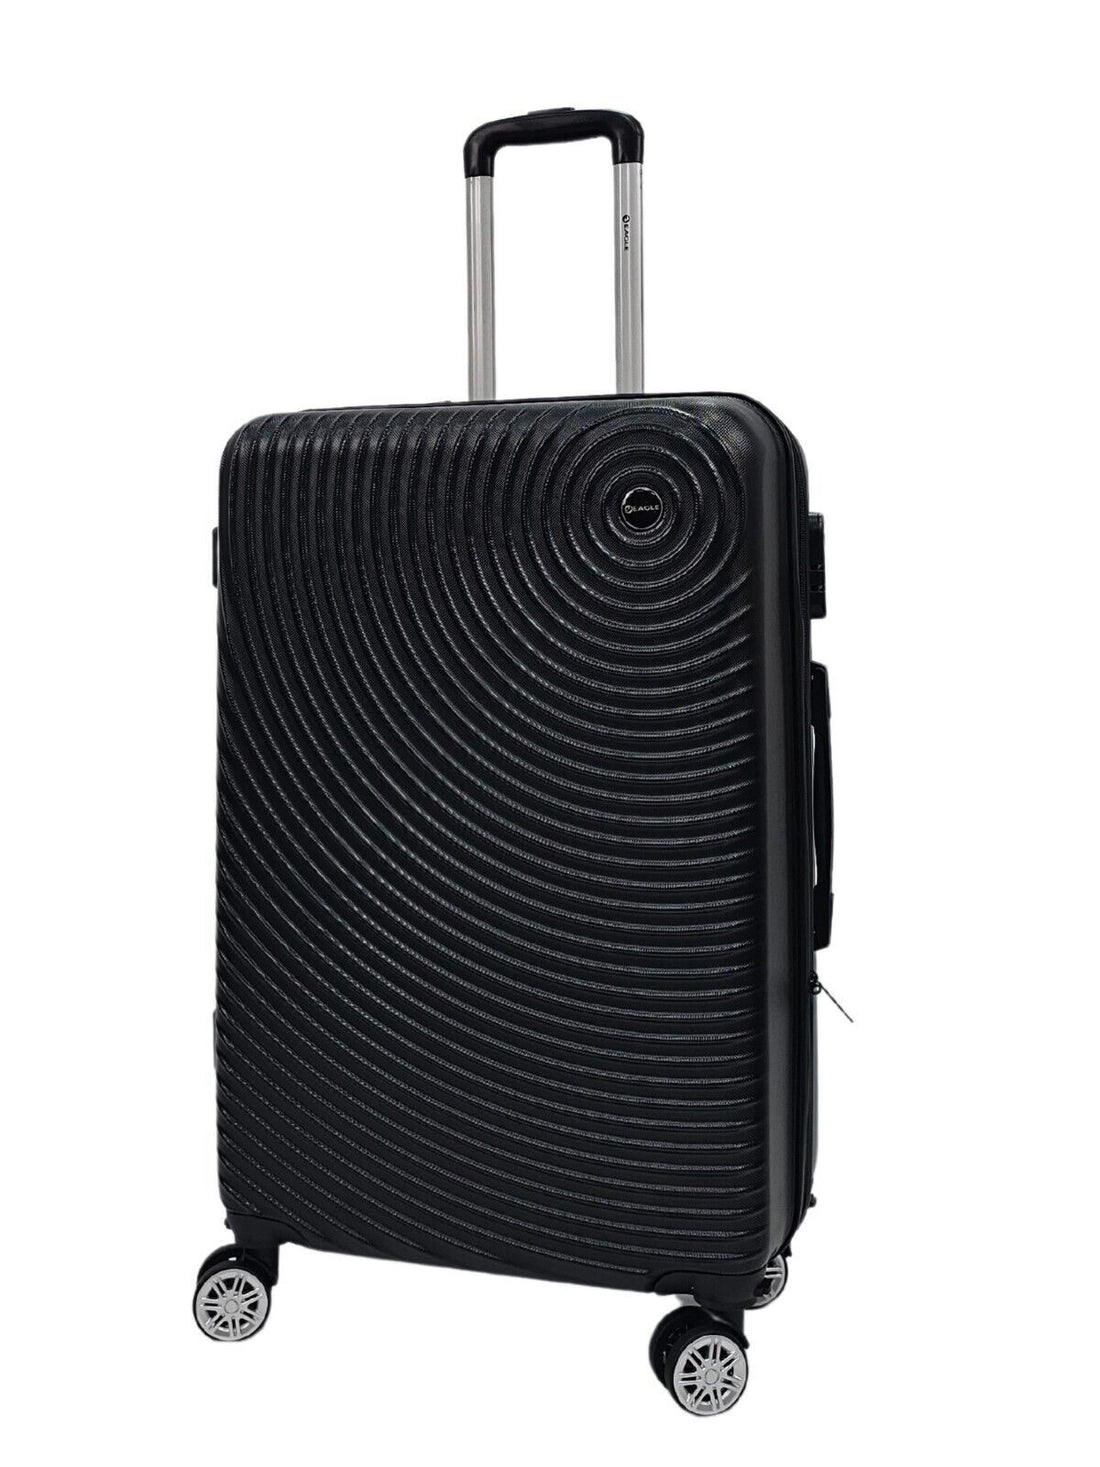 Hard Shell Black Cabin Suitcase Set 8 Wheel Luggage Case Travel Bag - Upperclass Fashions 